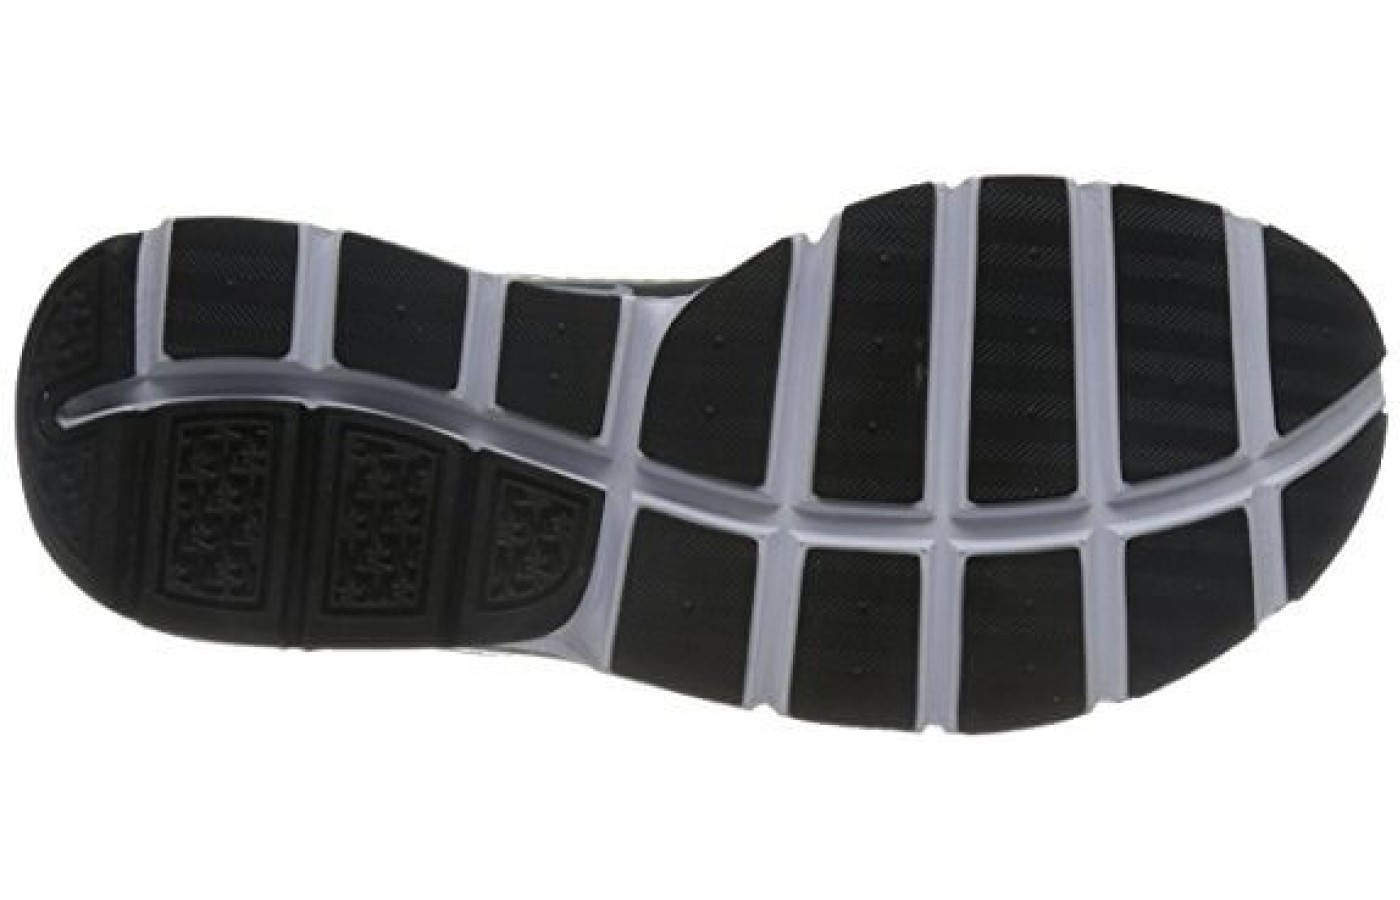 The Nike Sock Dart SE Premium sole